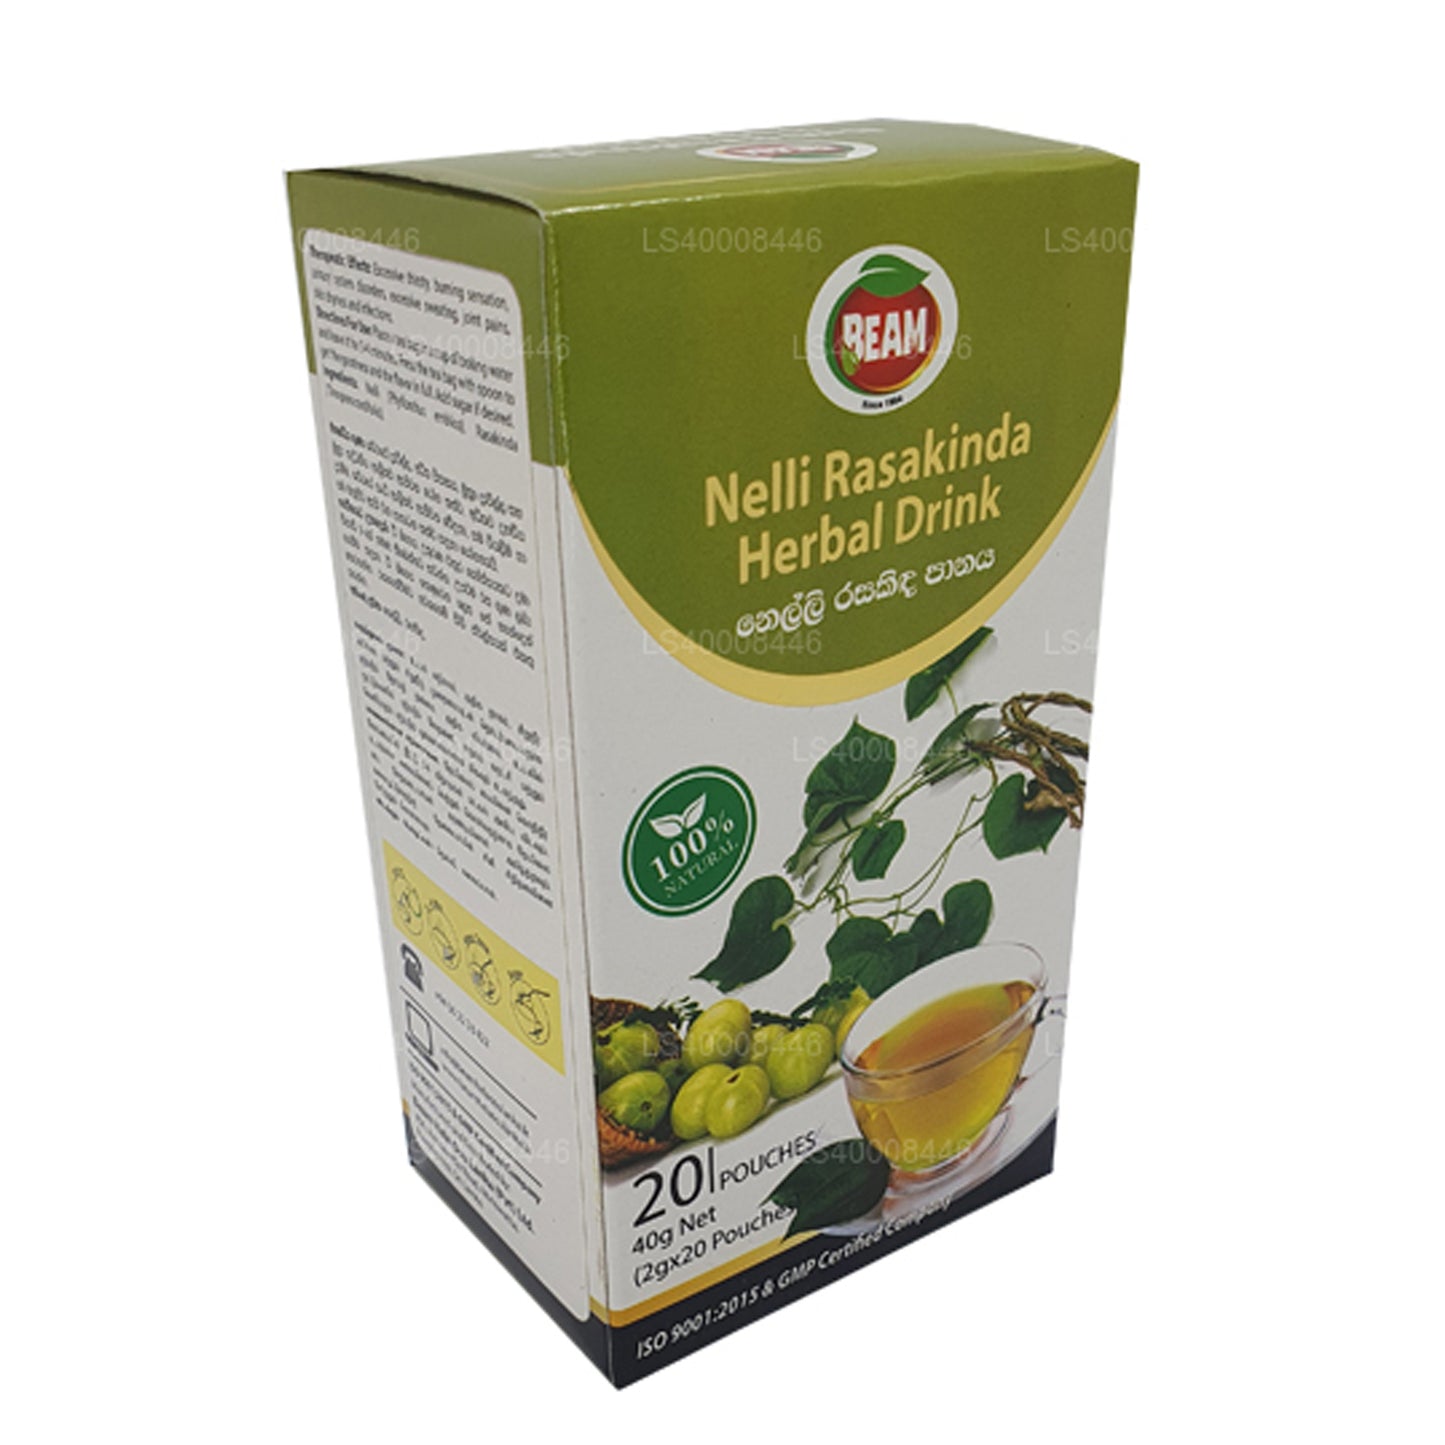 Beam Nelli Rasakinda Herbal Drink (40g) 20 Tea Bags